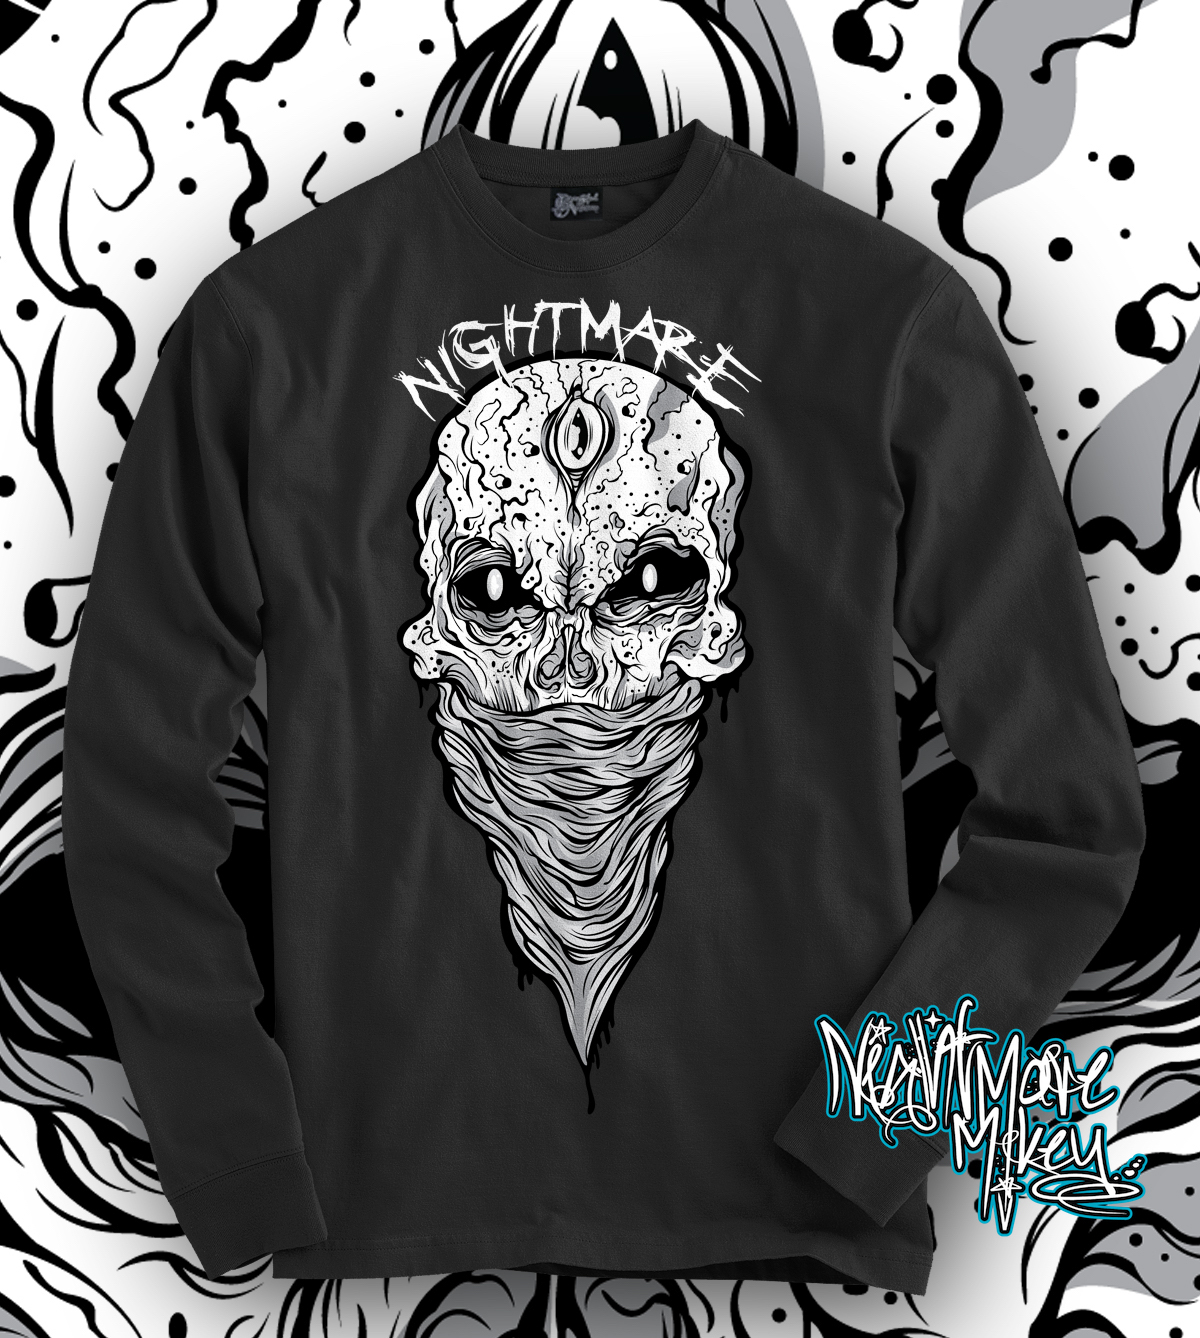 apparel nightmaremikey ILLUSTRATION  skull skulls zombie bandit ghoul goblin designbyhumans